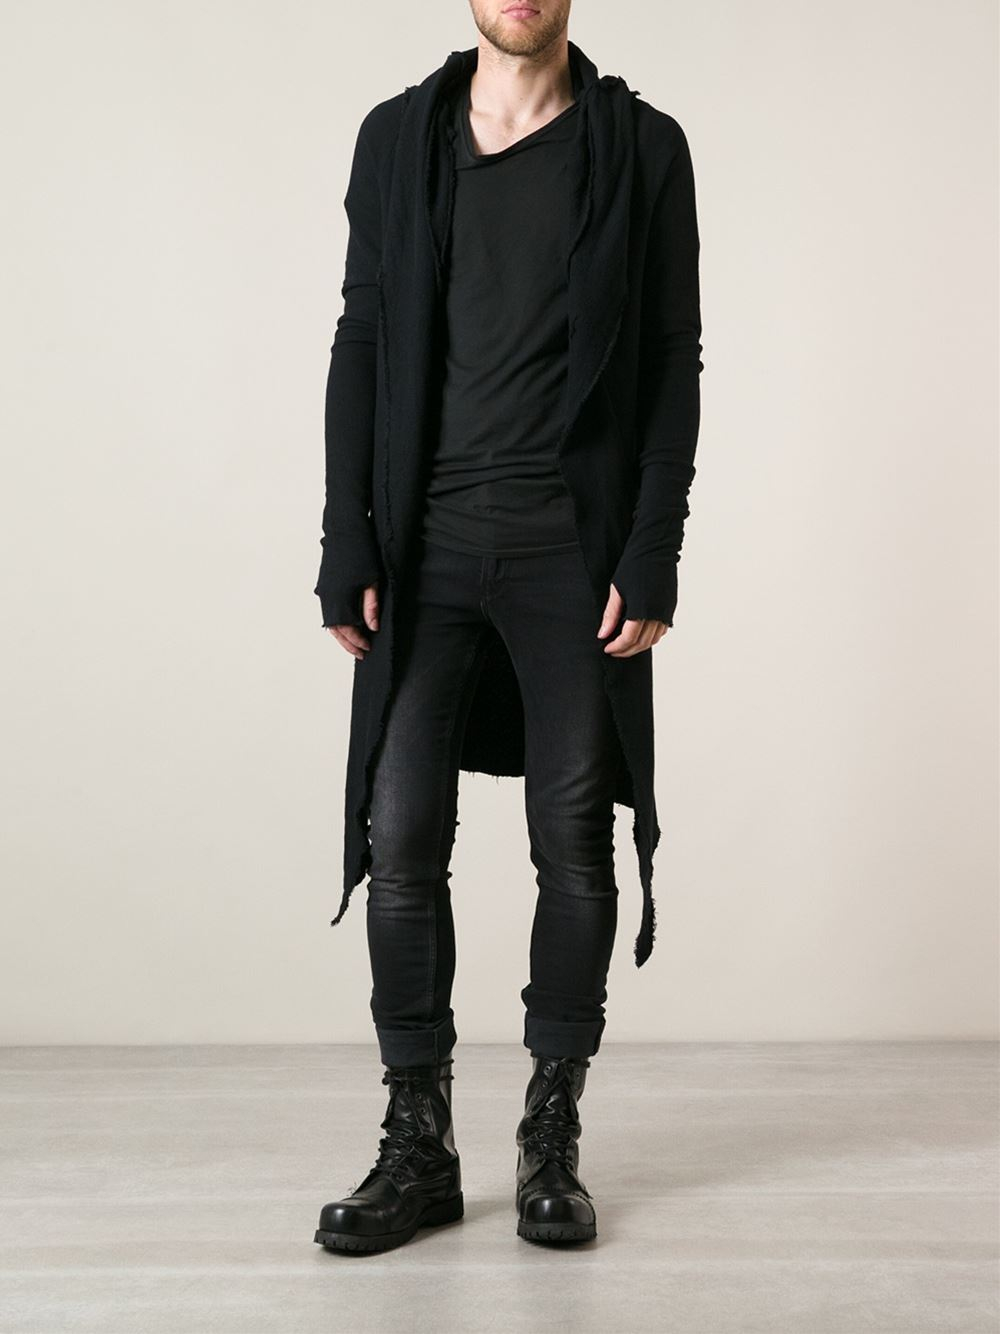 Lyst - Thom Krom Long Asymmetric Cardigan in Black for Men